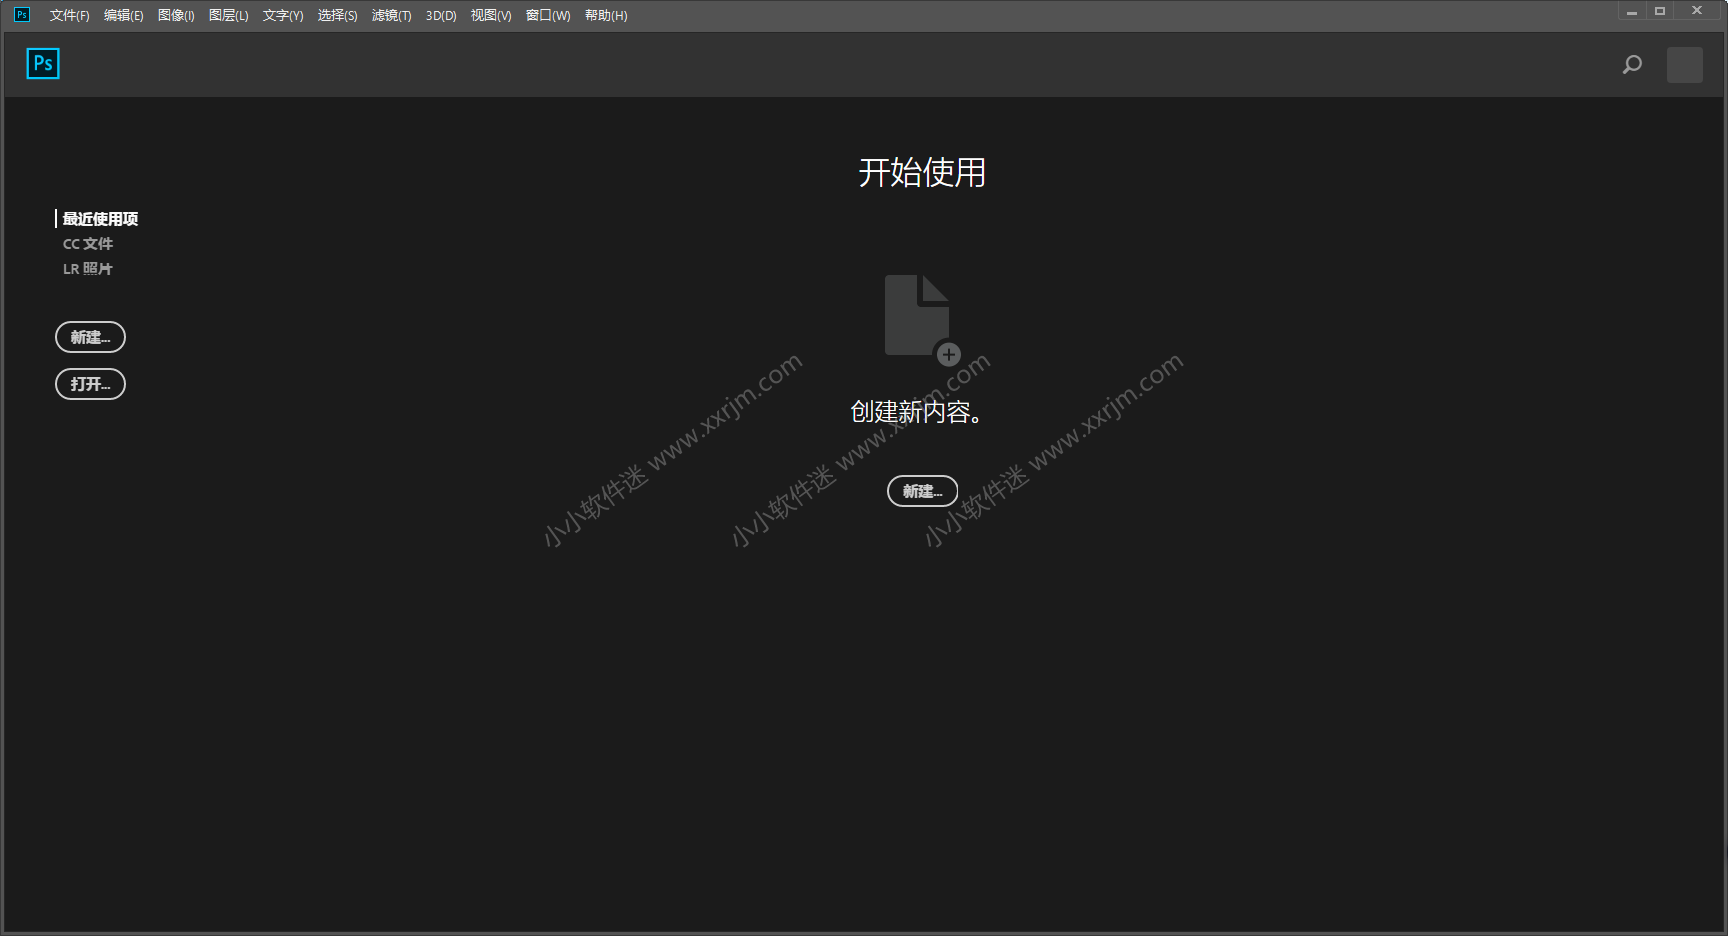 photoshop cc2018官方中文版下载地址和安装教程